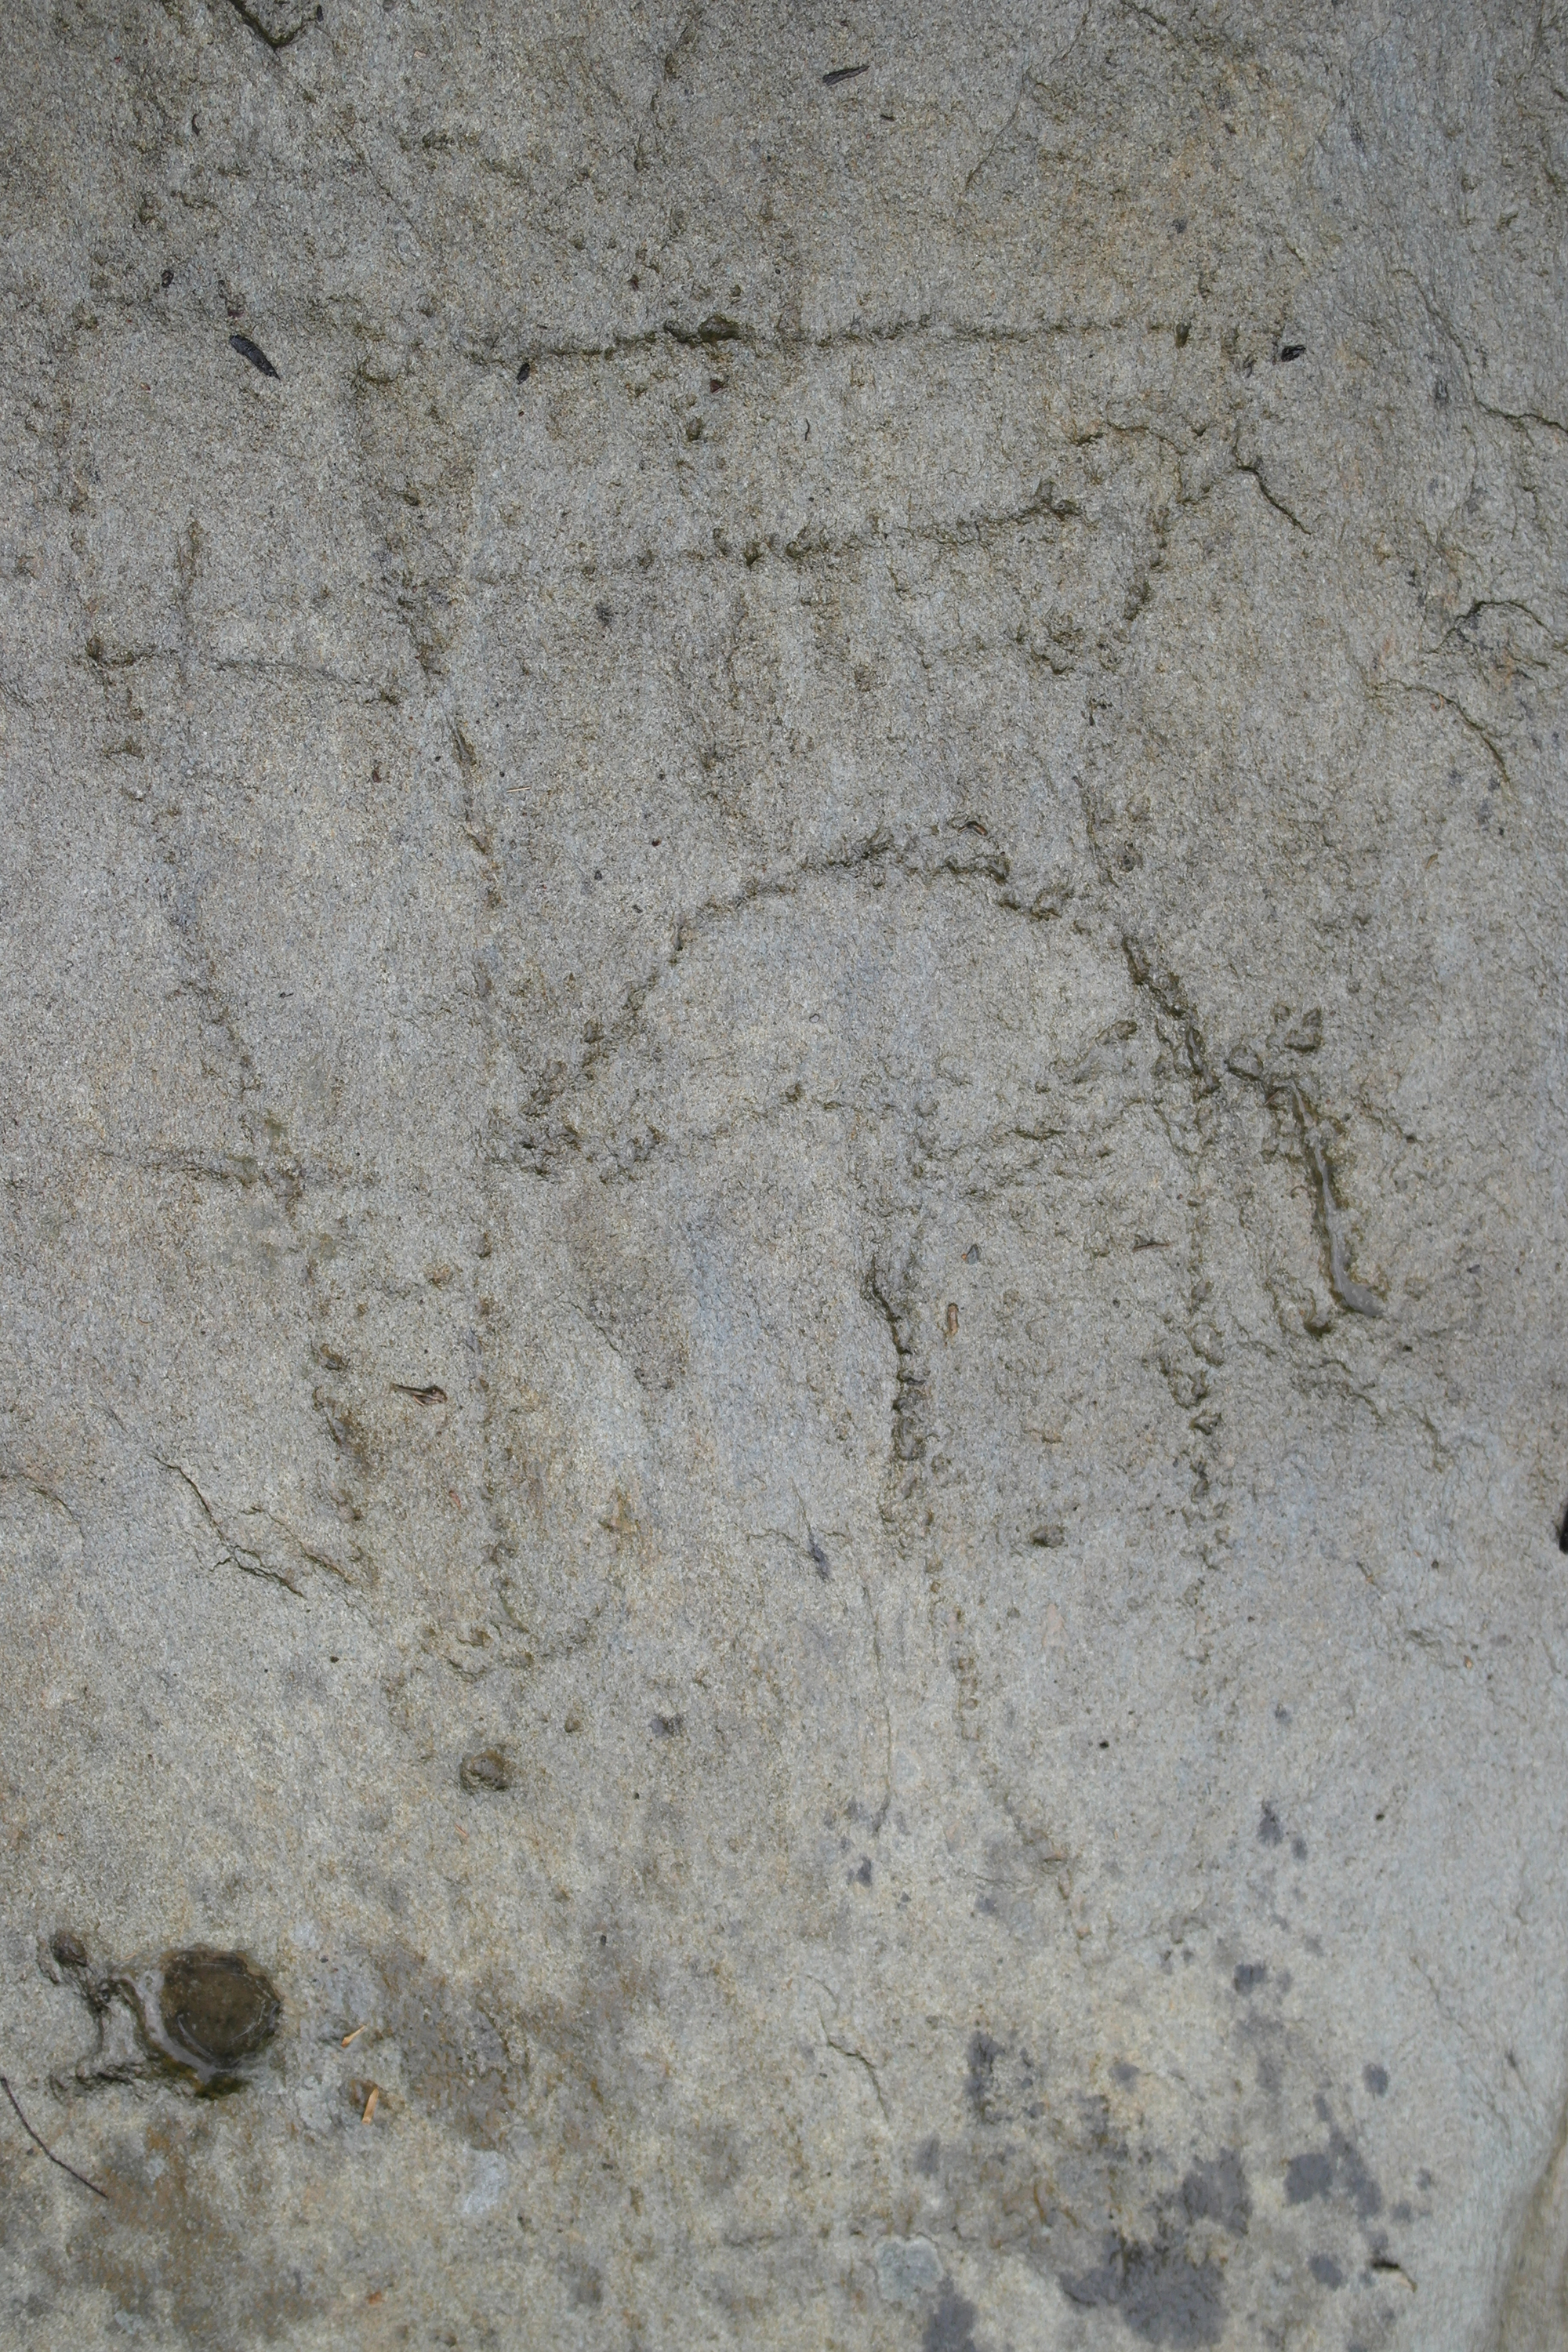 Petroglyph - curved blades ''pennati''